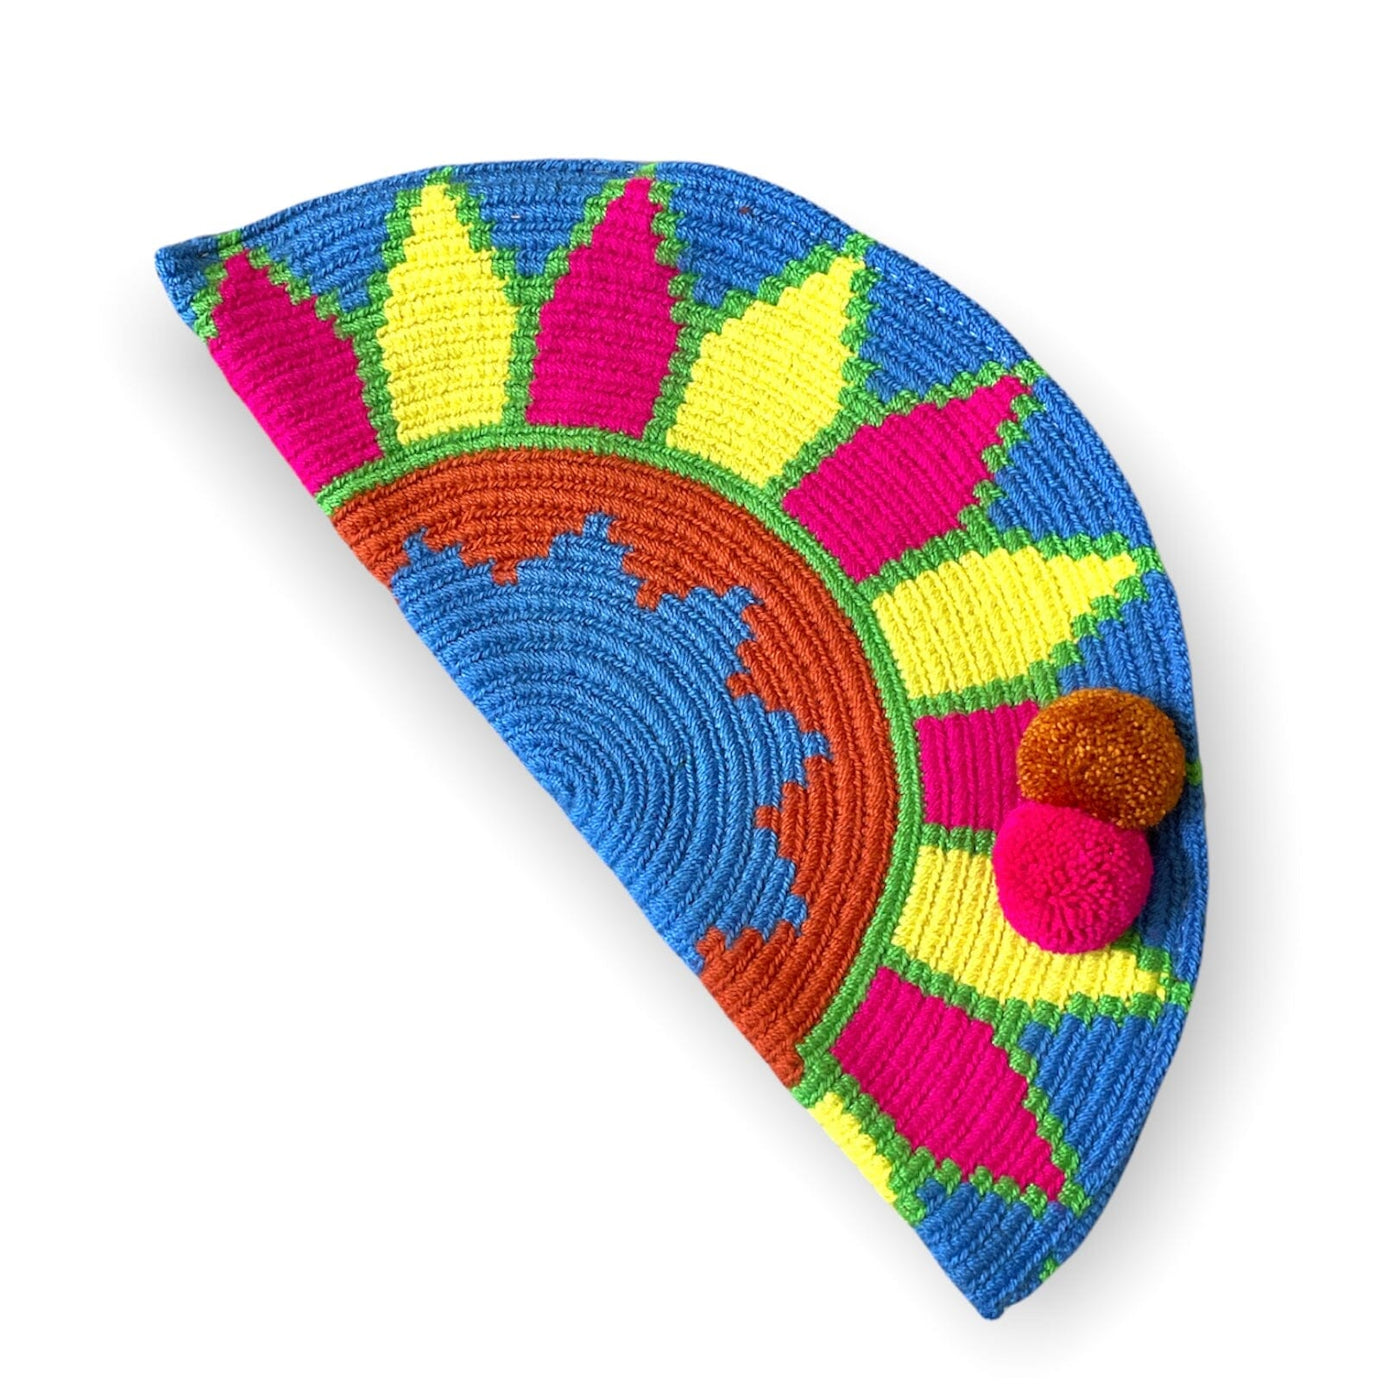 Spring & Summer Moon Clutch Bags Boho Clutch Bag - Wayuu Crochet Envelope N06 Neon Indigo Blue 